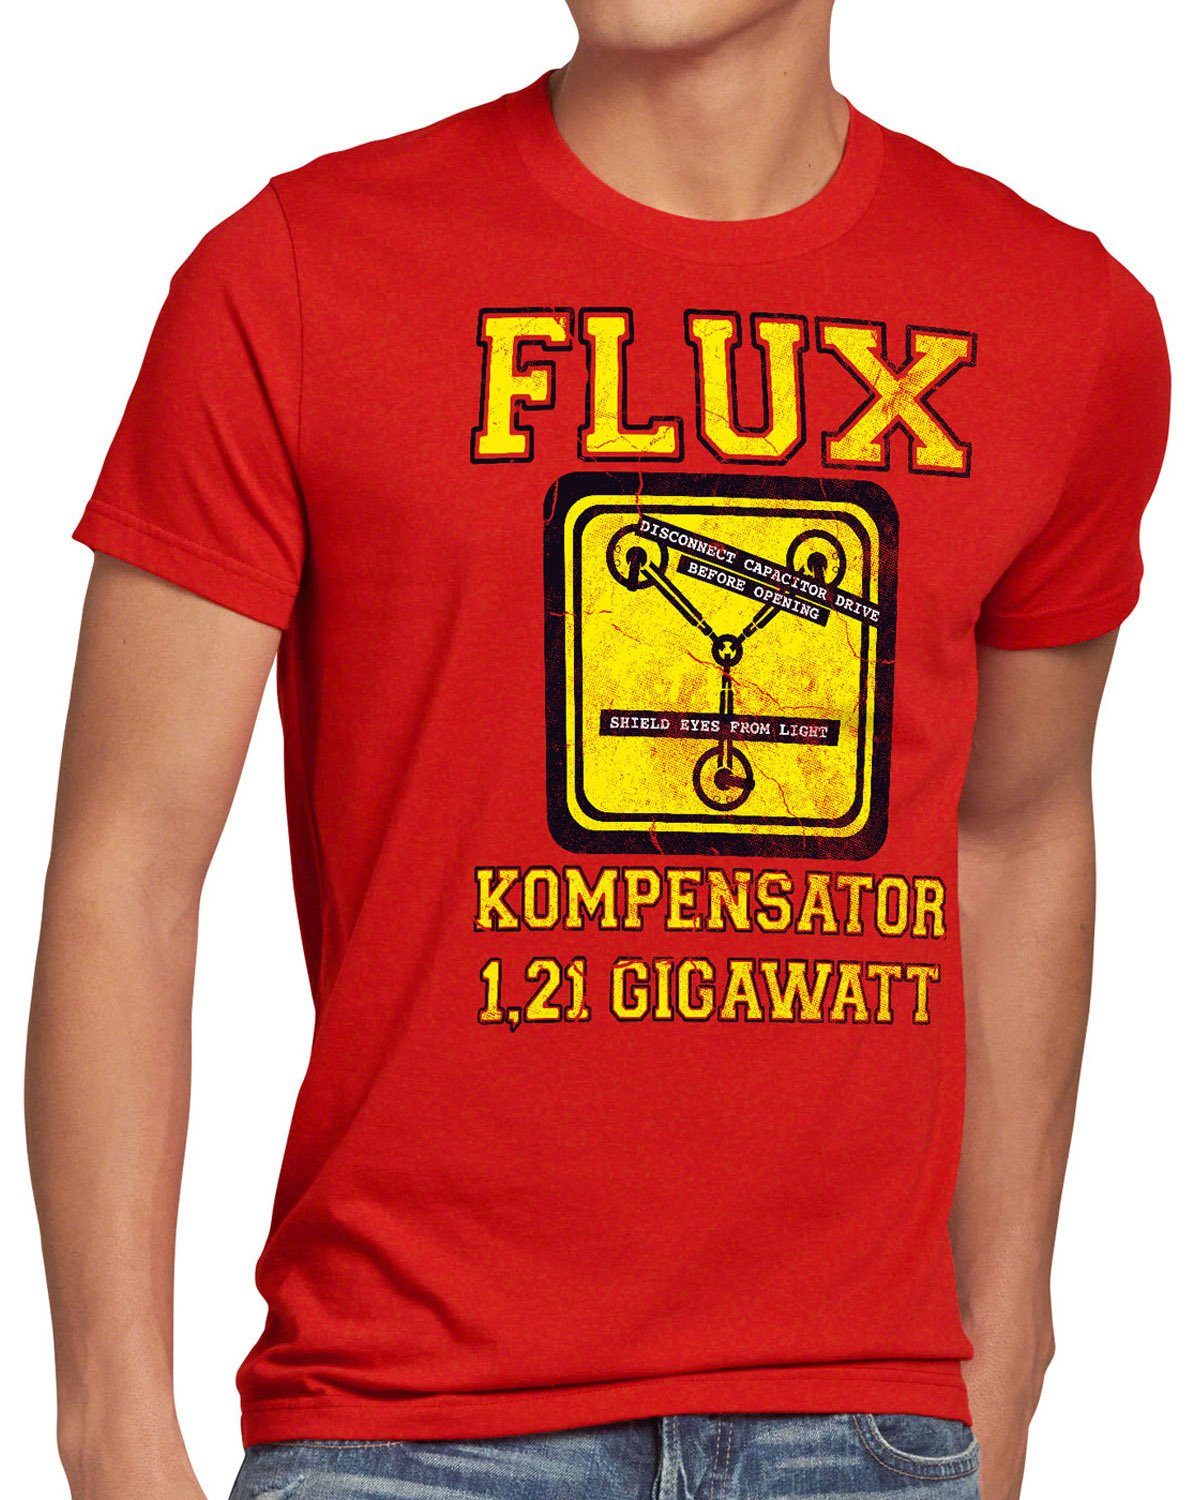 Flux Future Herren Gamer rot Zurück Kompensator Zukunft Zeitreise T-Shirt style3 Print-Shirt delorean